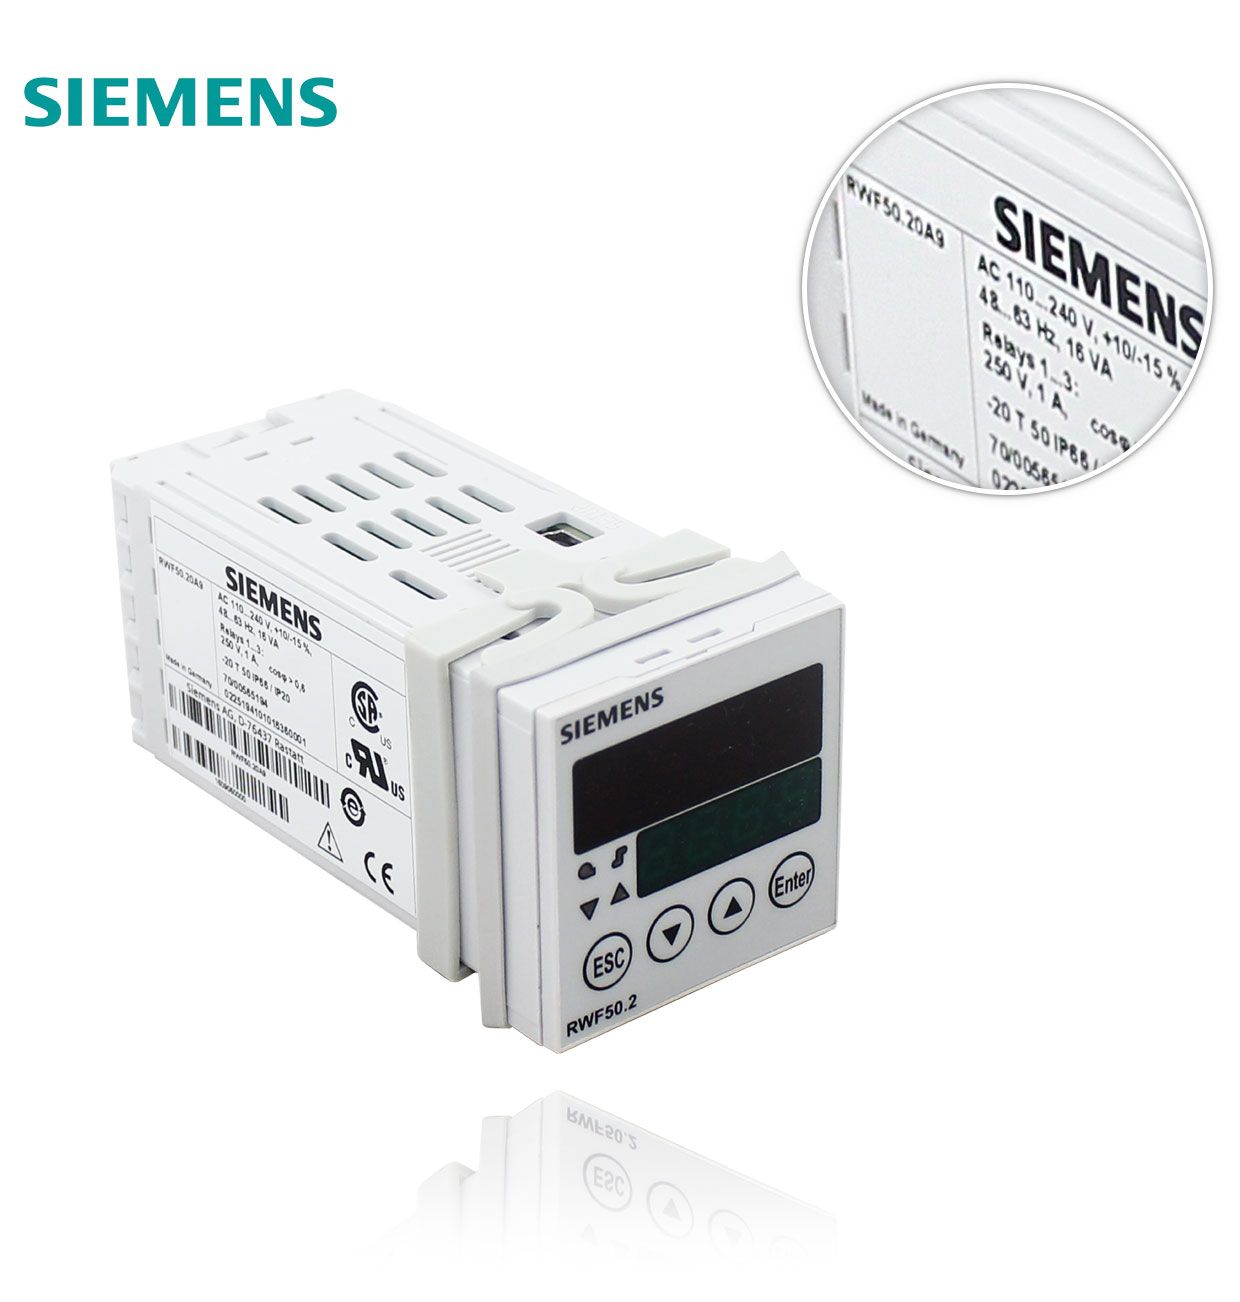 Siemens RWF50.2